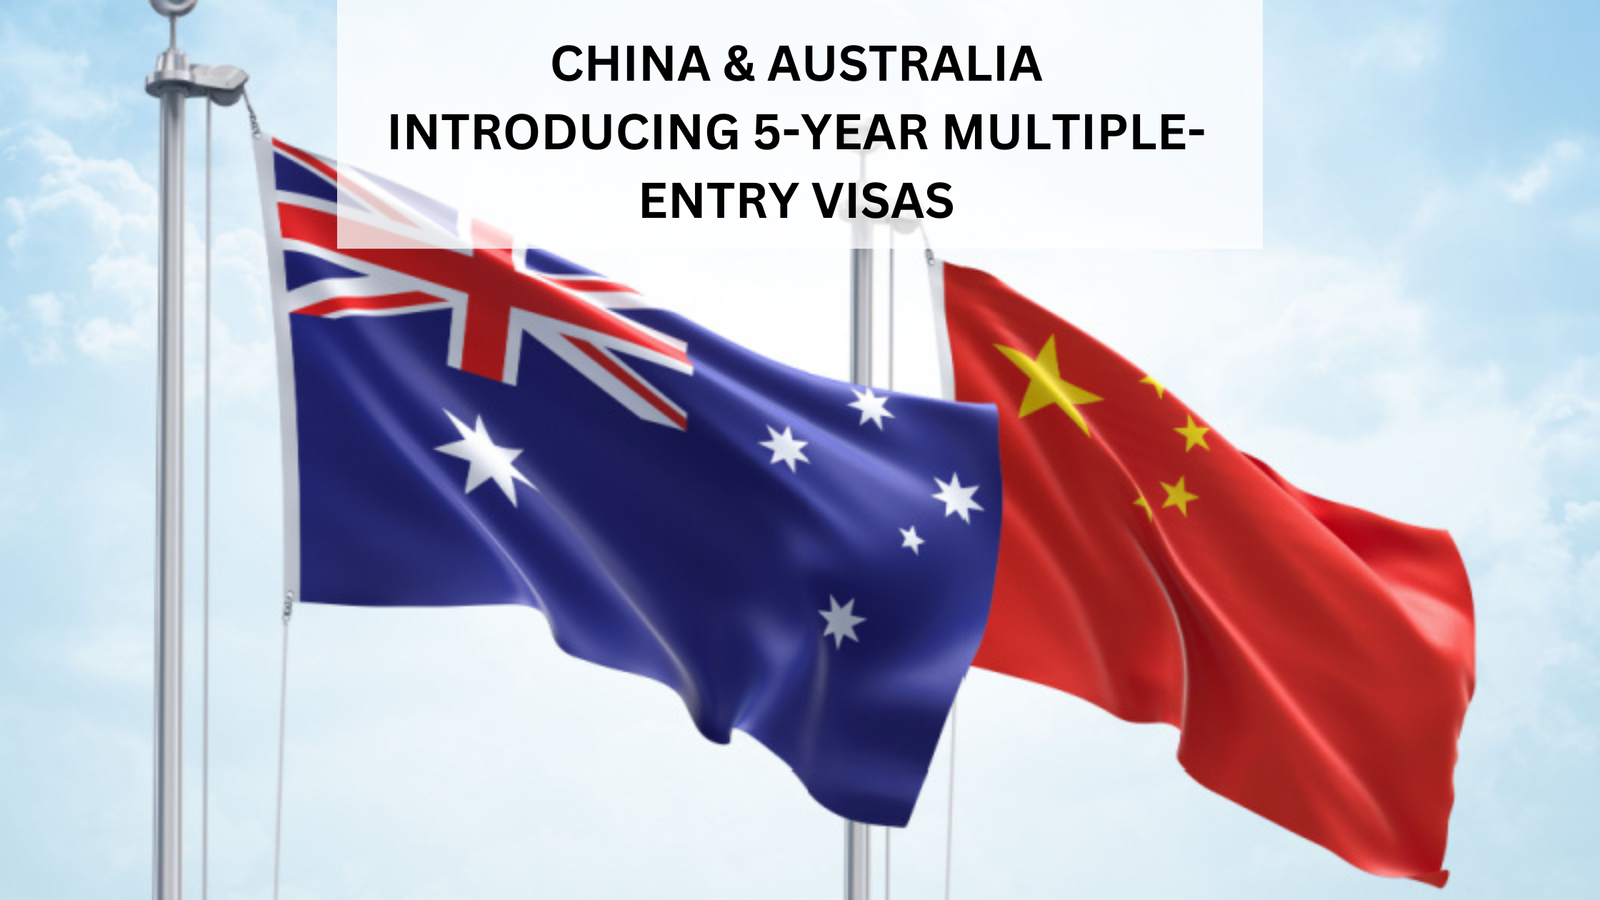 5-Year Multiple-Entry Visas